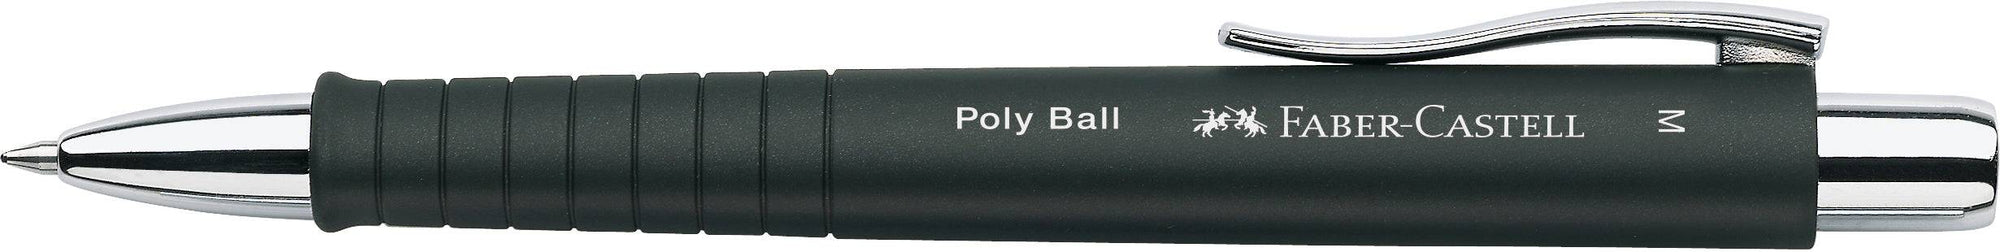 Faber-Castell Poly Ball Ballpoint Pen - Blesket Canada